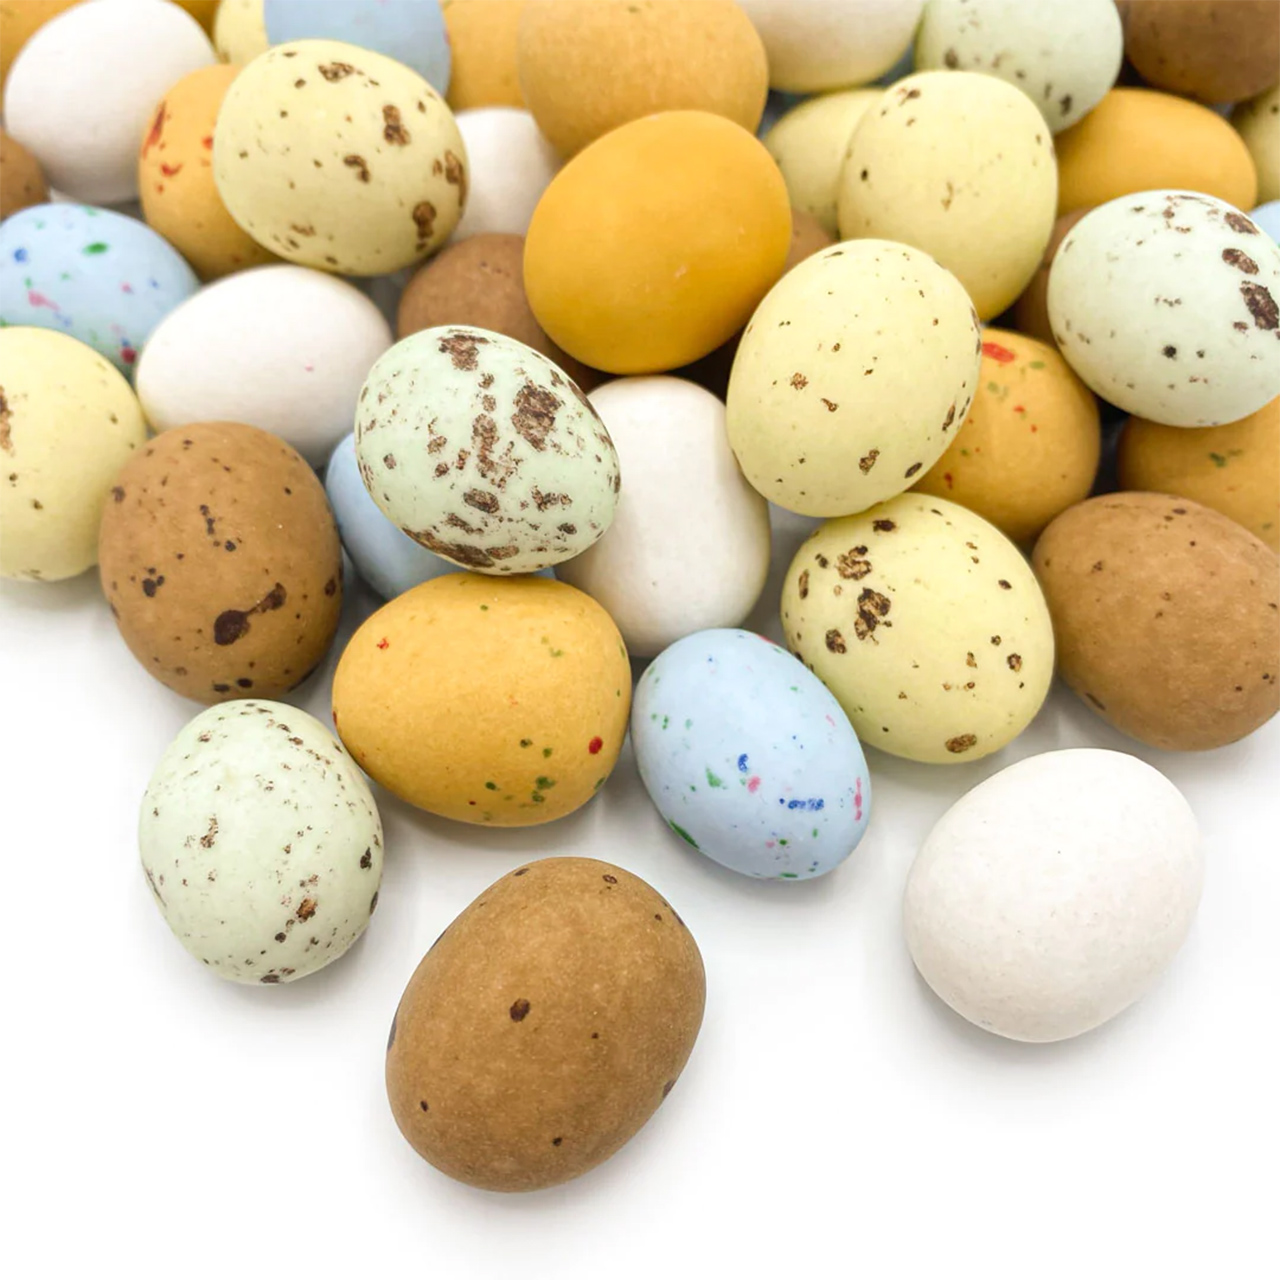 Trüffeleier - Easter Eggs-plosion